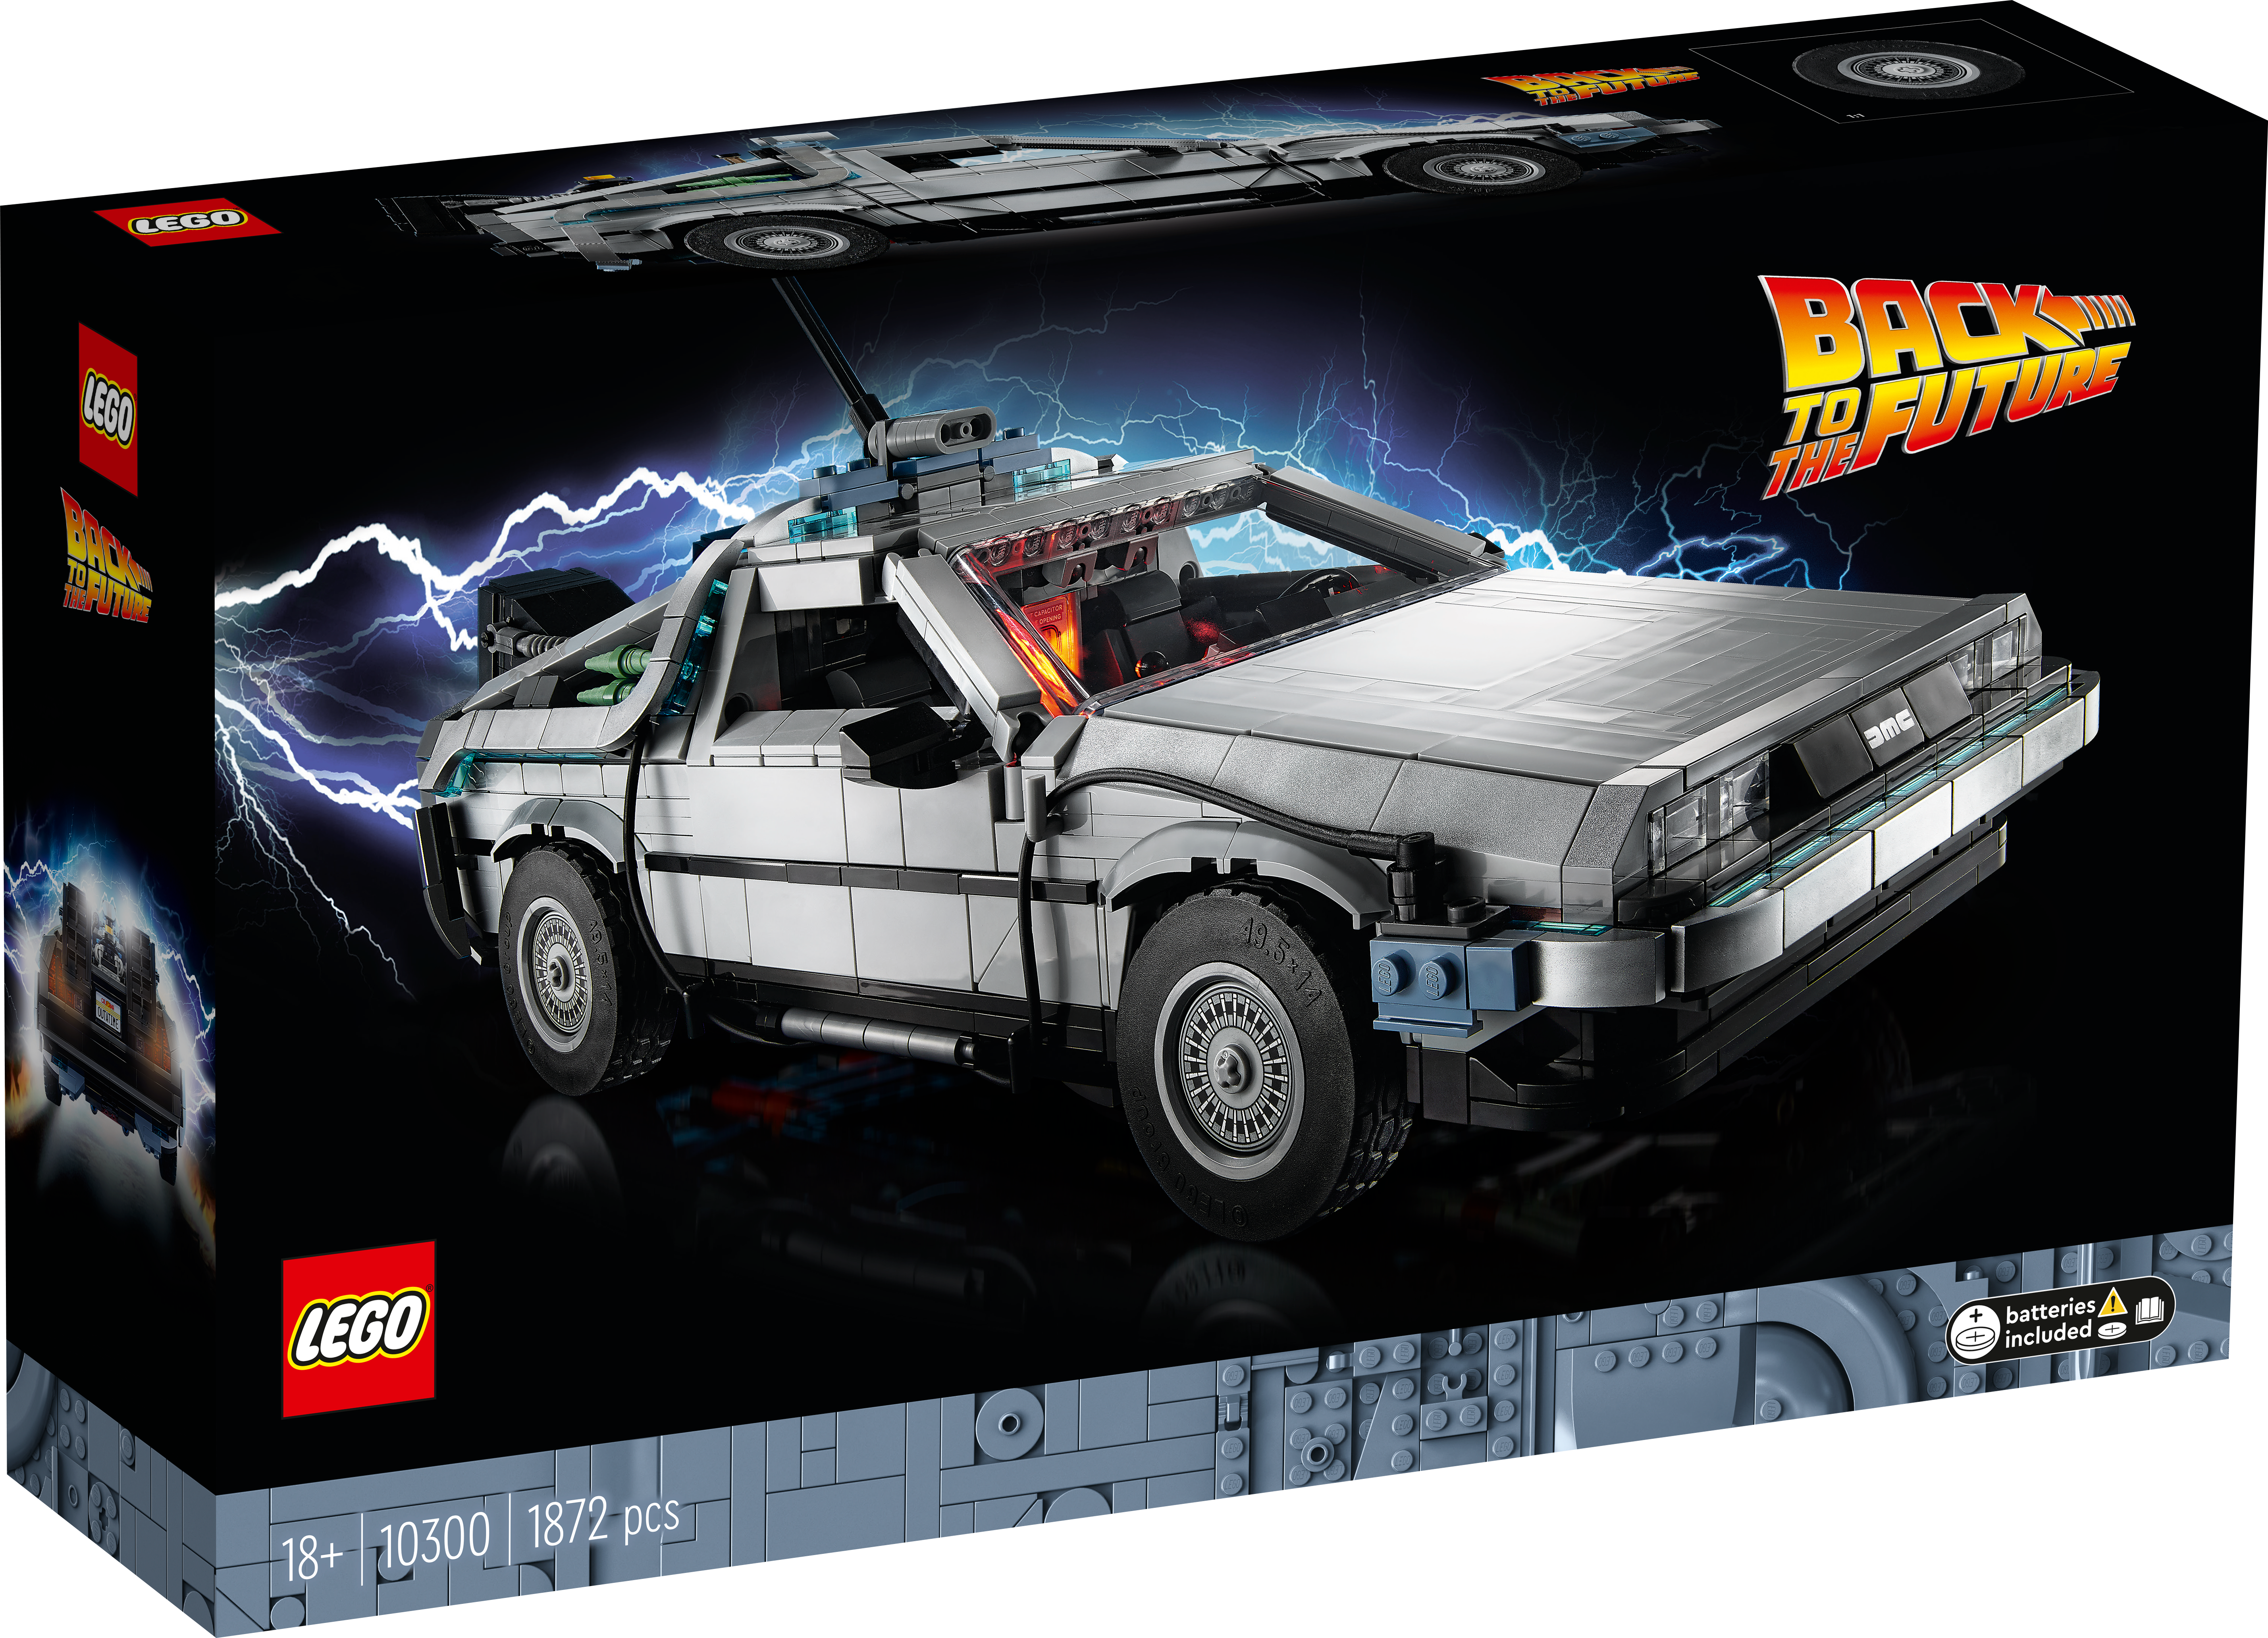 LEGO Back to the Future Time Machine Set Gets a Last Minute Mega Deal